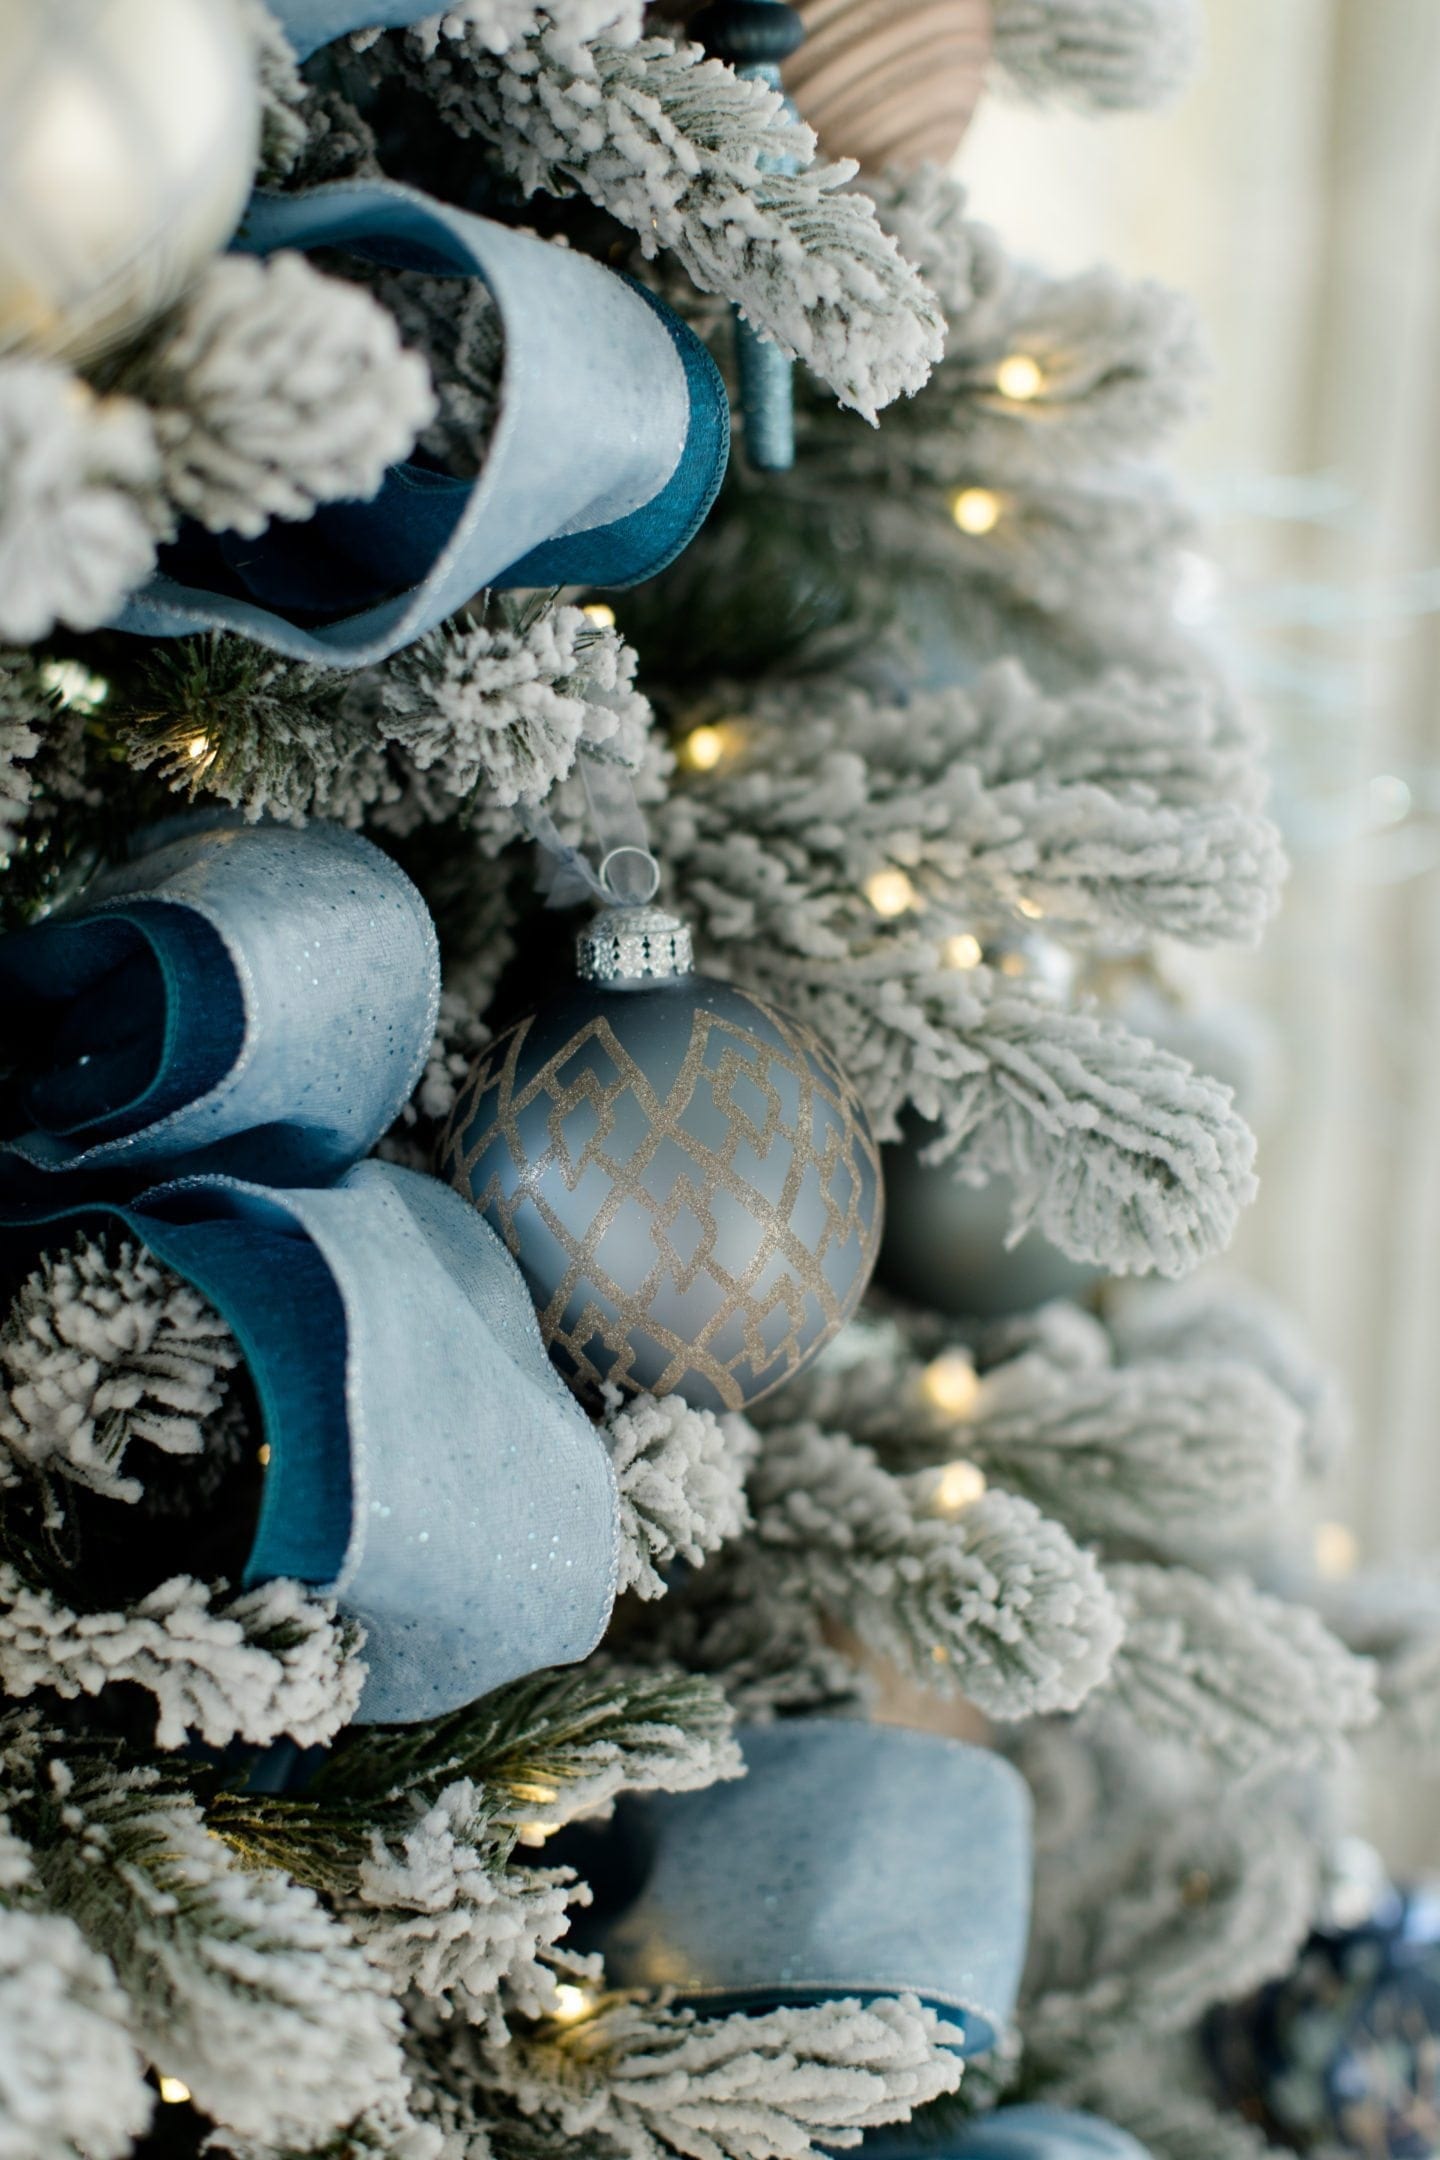 Blue glass Christmas ornaments on white flocked Christmas tree